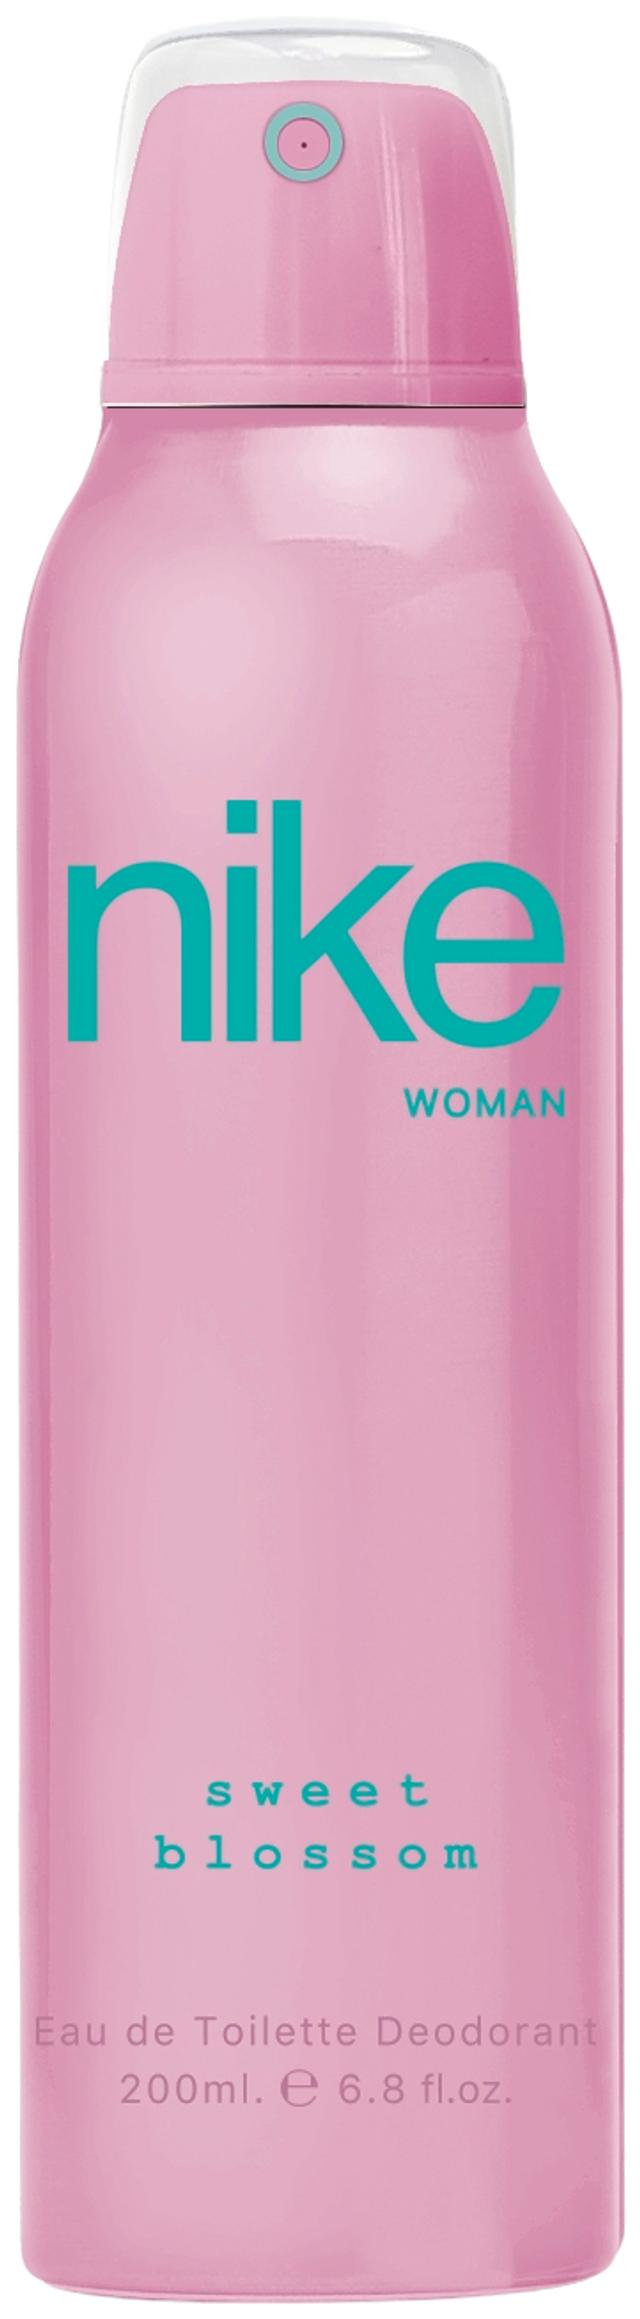 Nike Sweet Blossom Woman EdT suihkedeodorantti 200ml